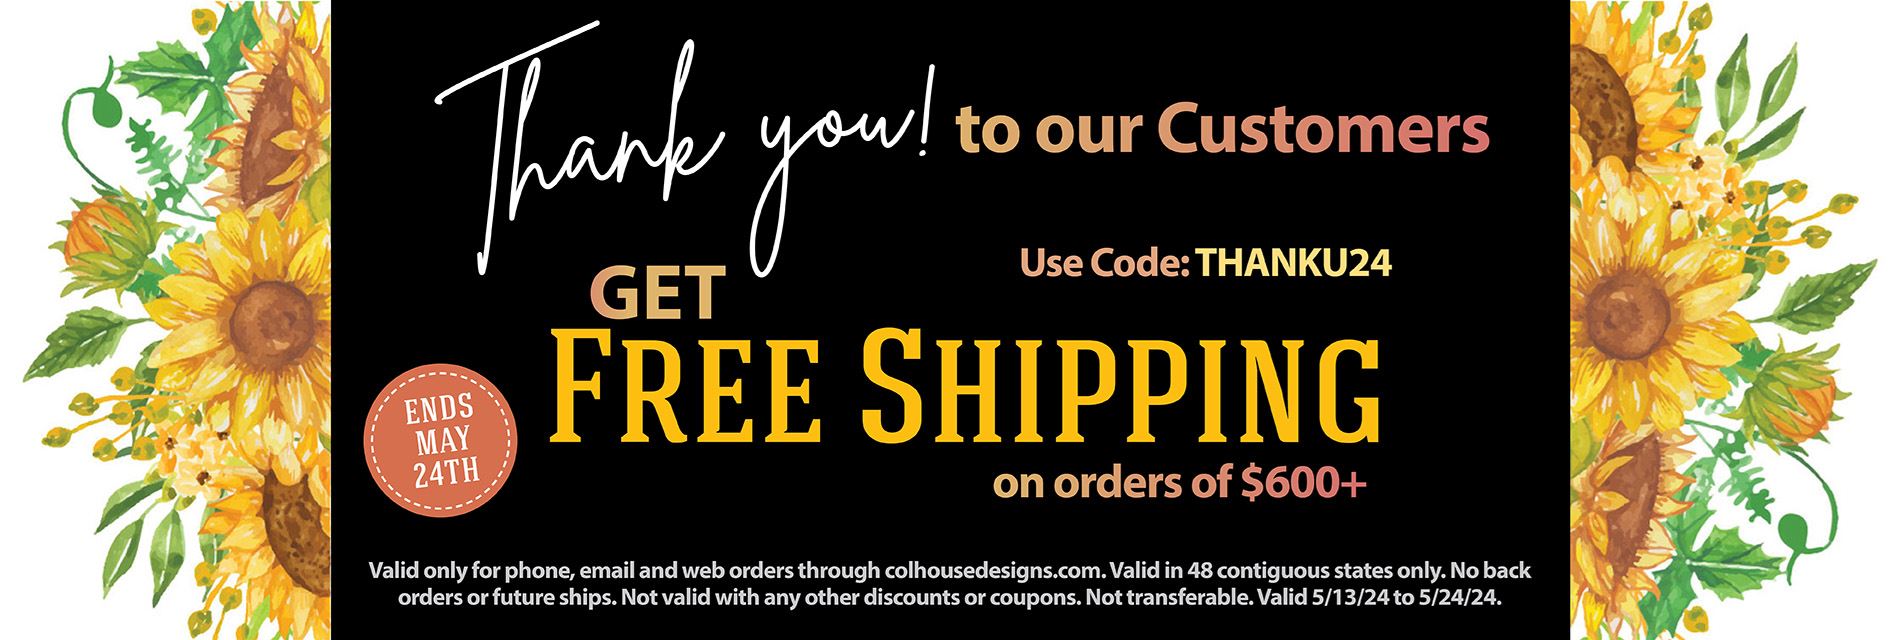 Customer Appreciation - Free Shipping Orders $600+